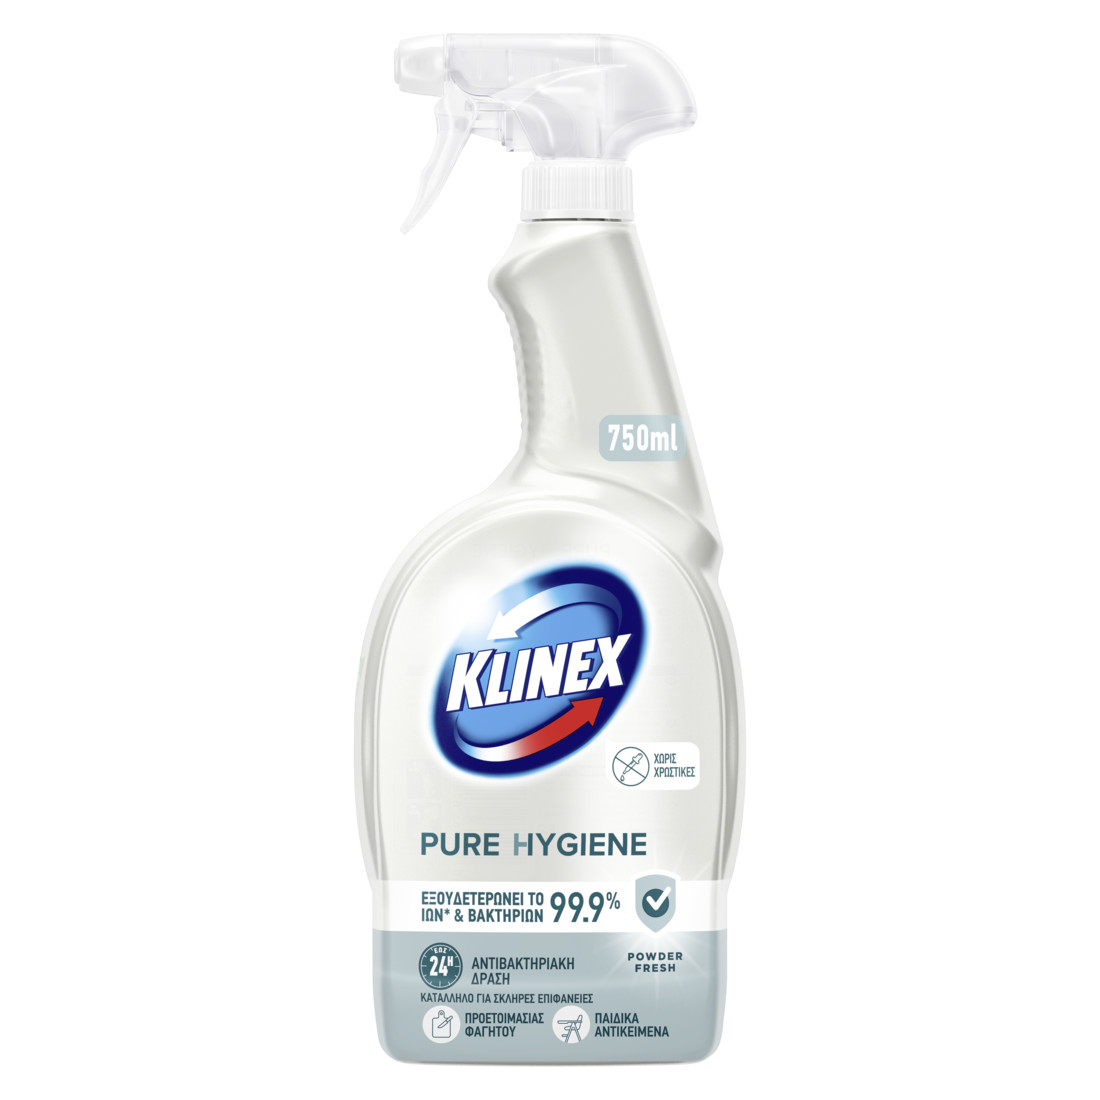 Klinex Pure Hygiene Σπρέυ Powder Fresh